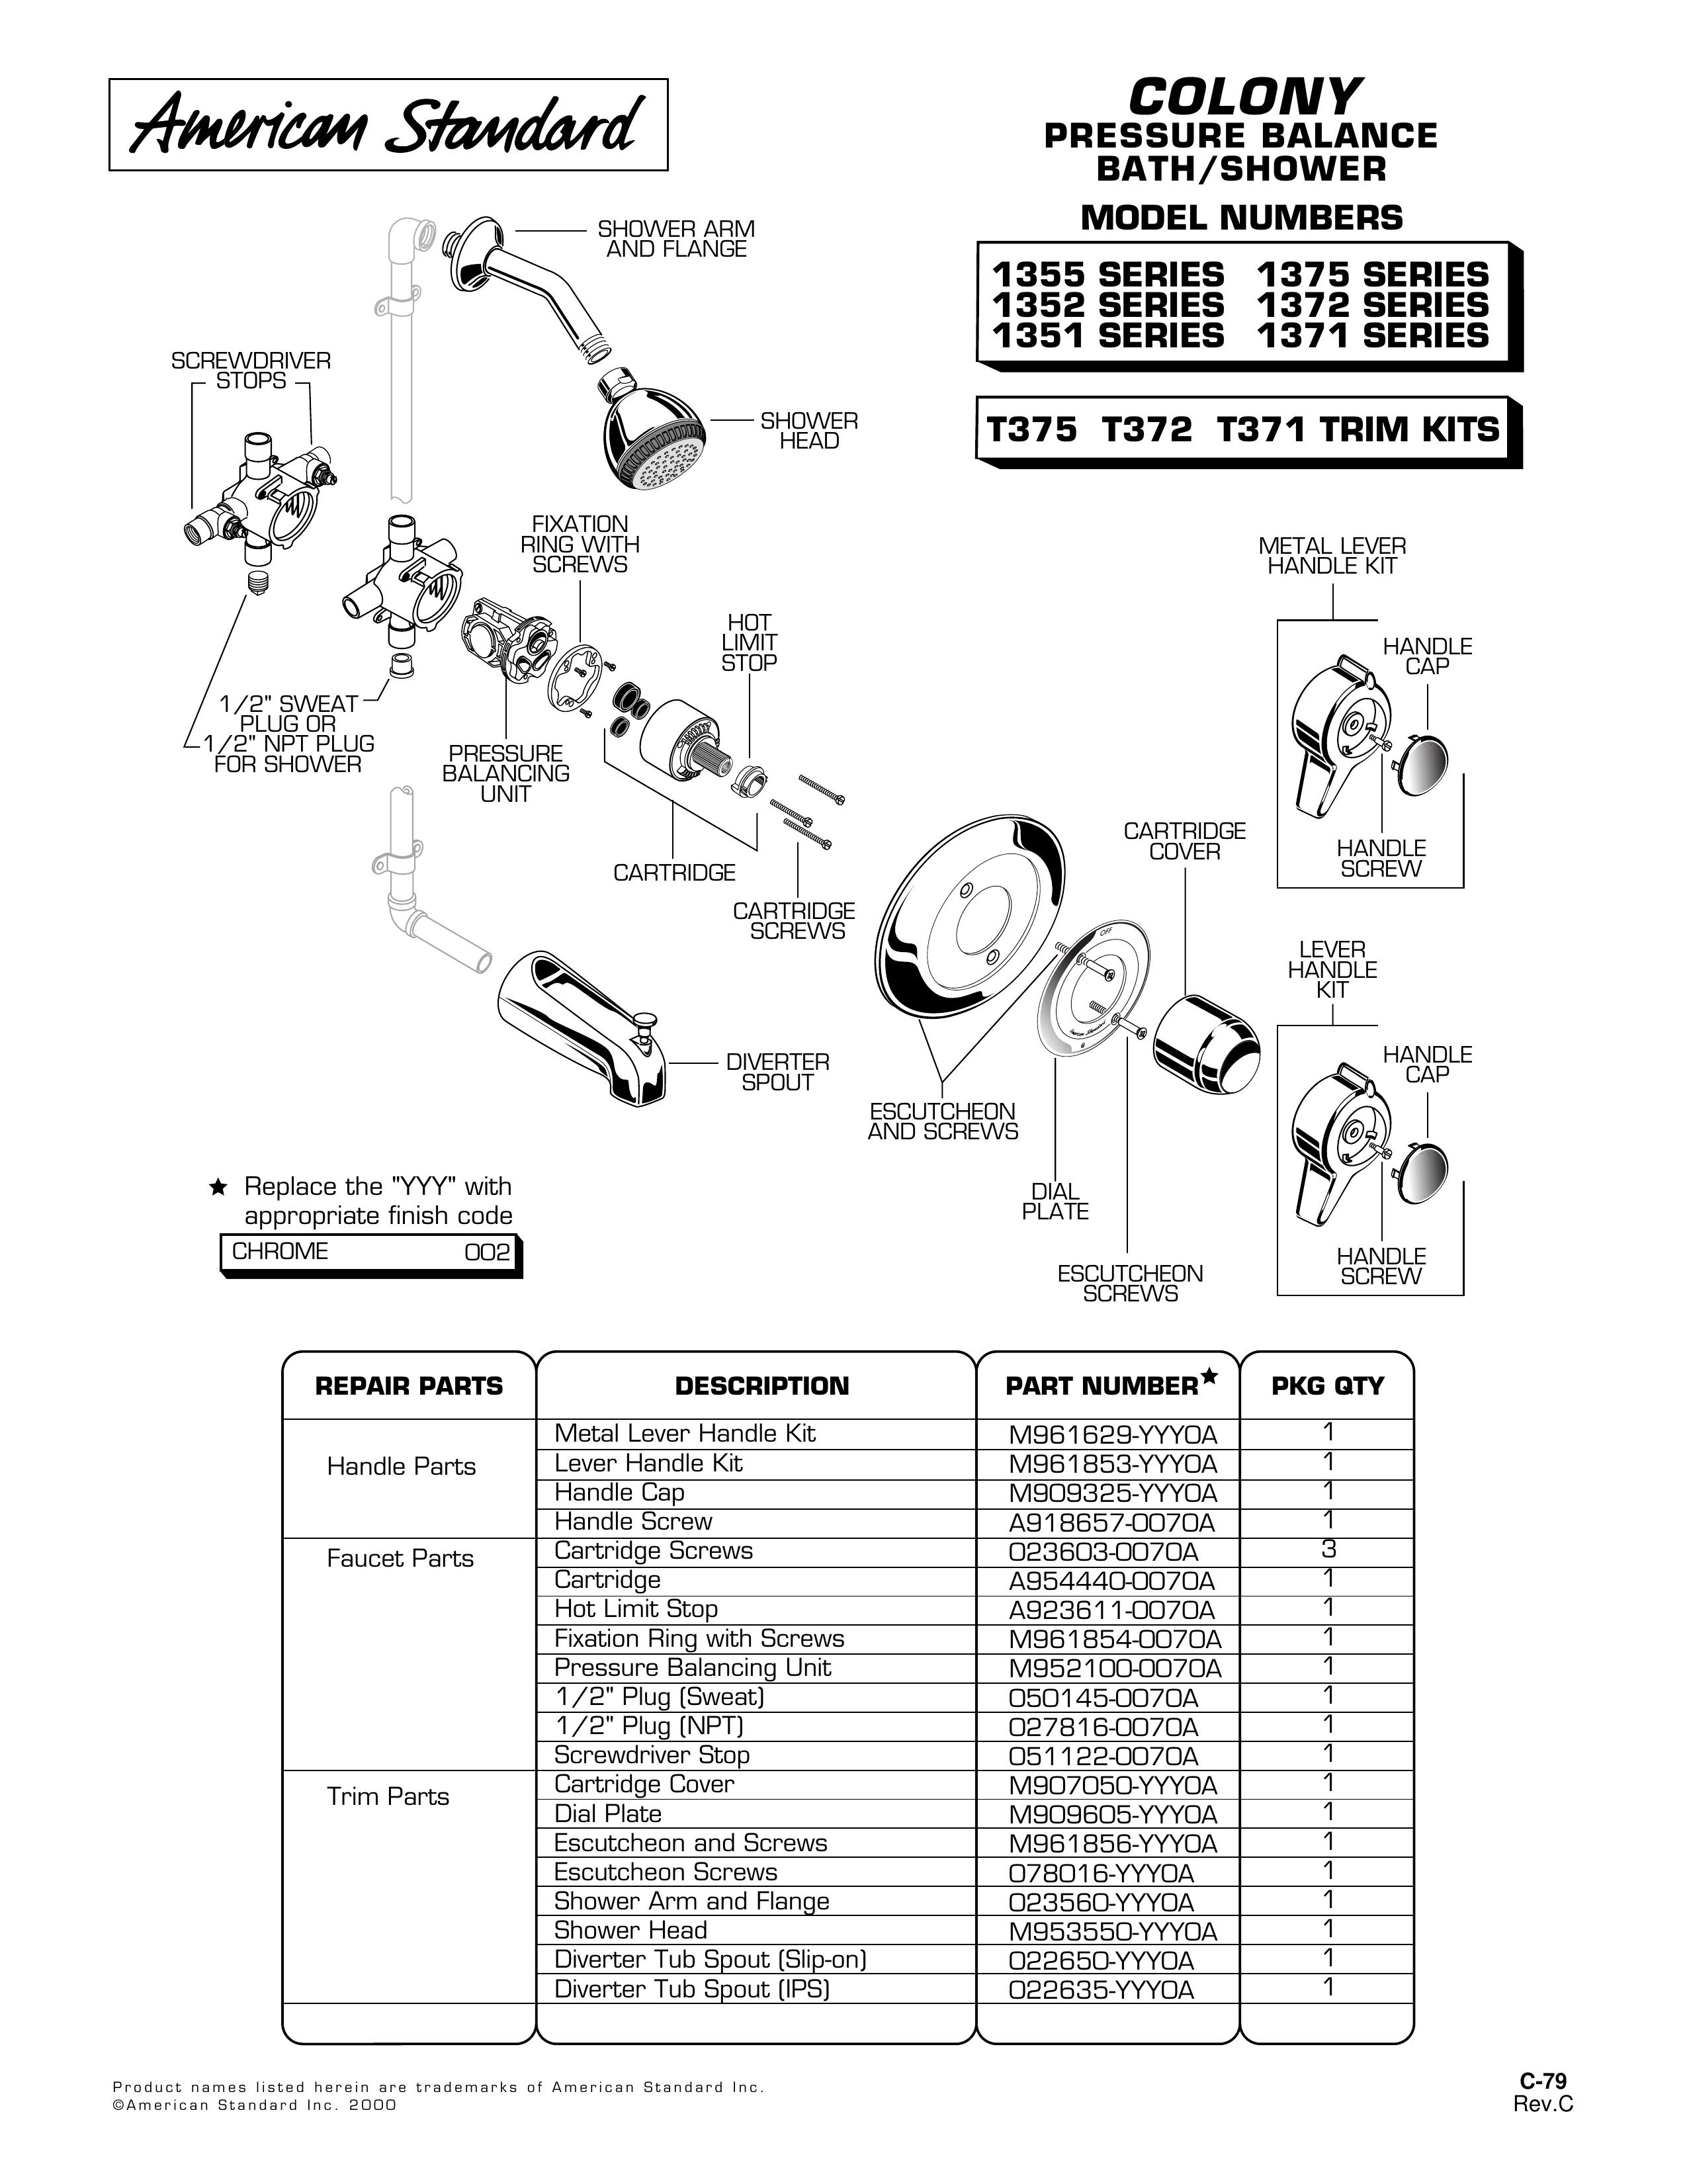 American Standard 1352 SERIES Outdoor Shower User Manual